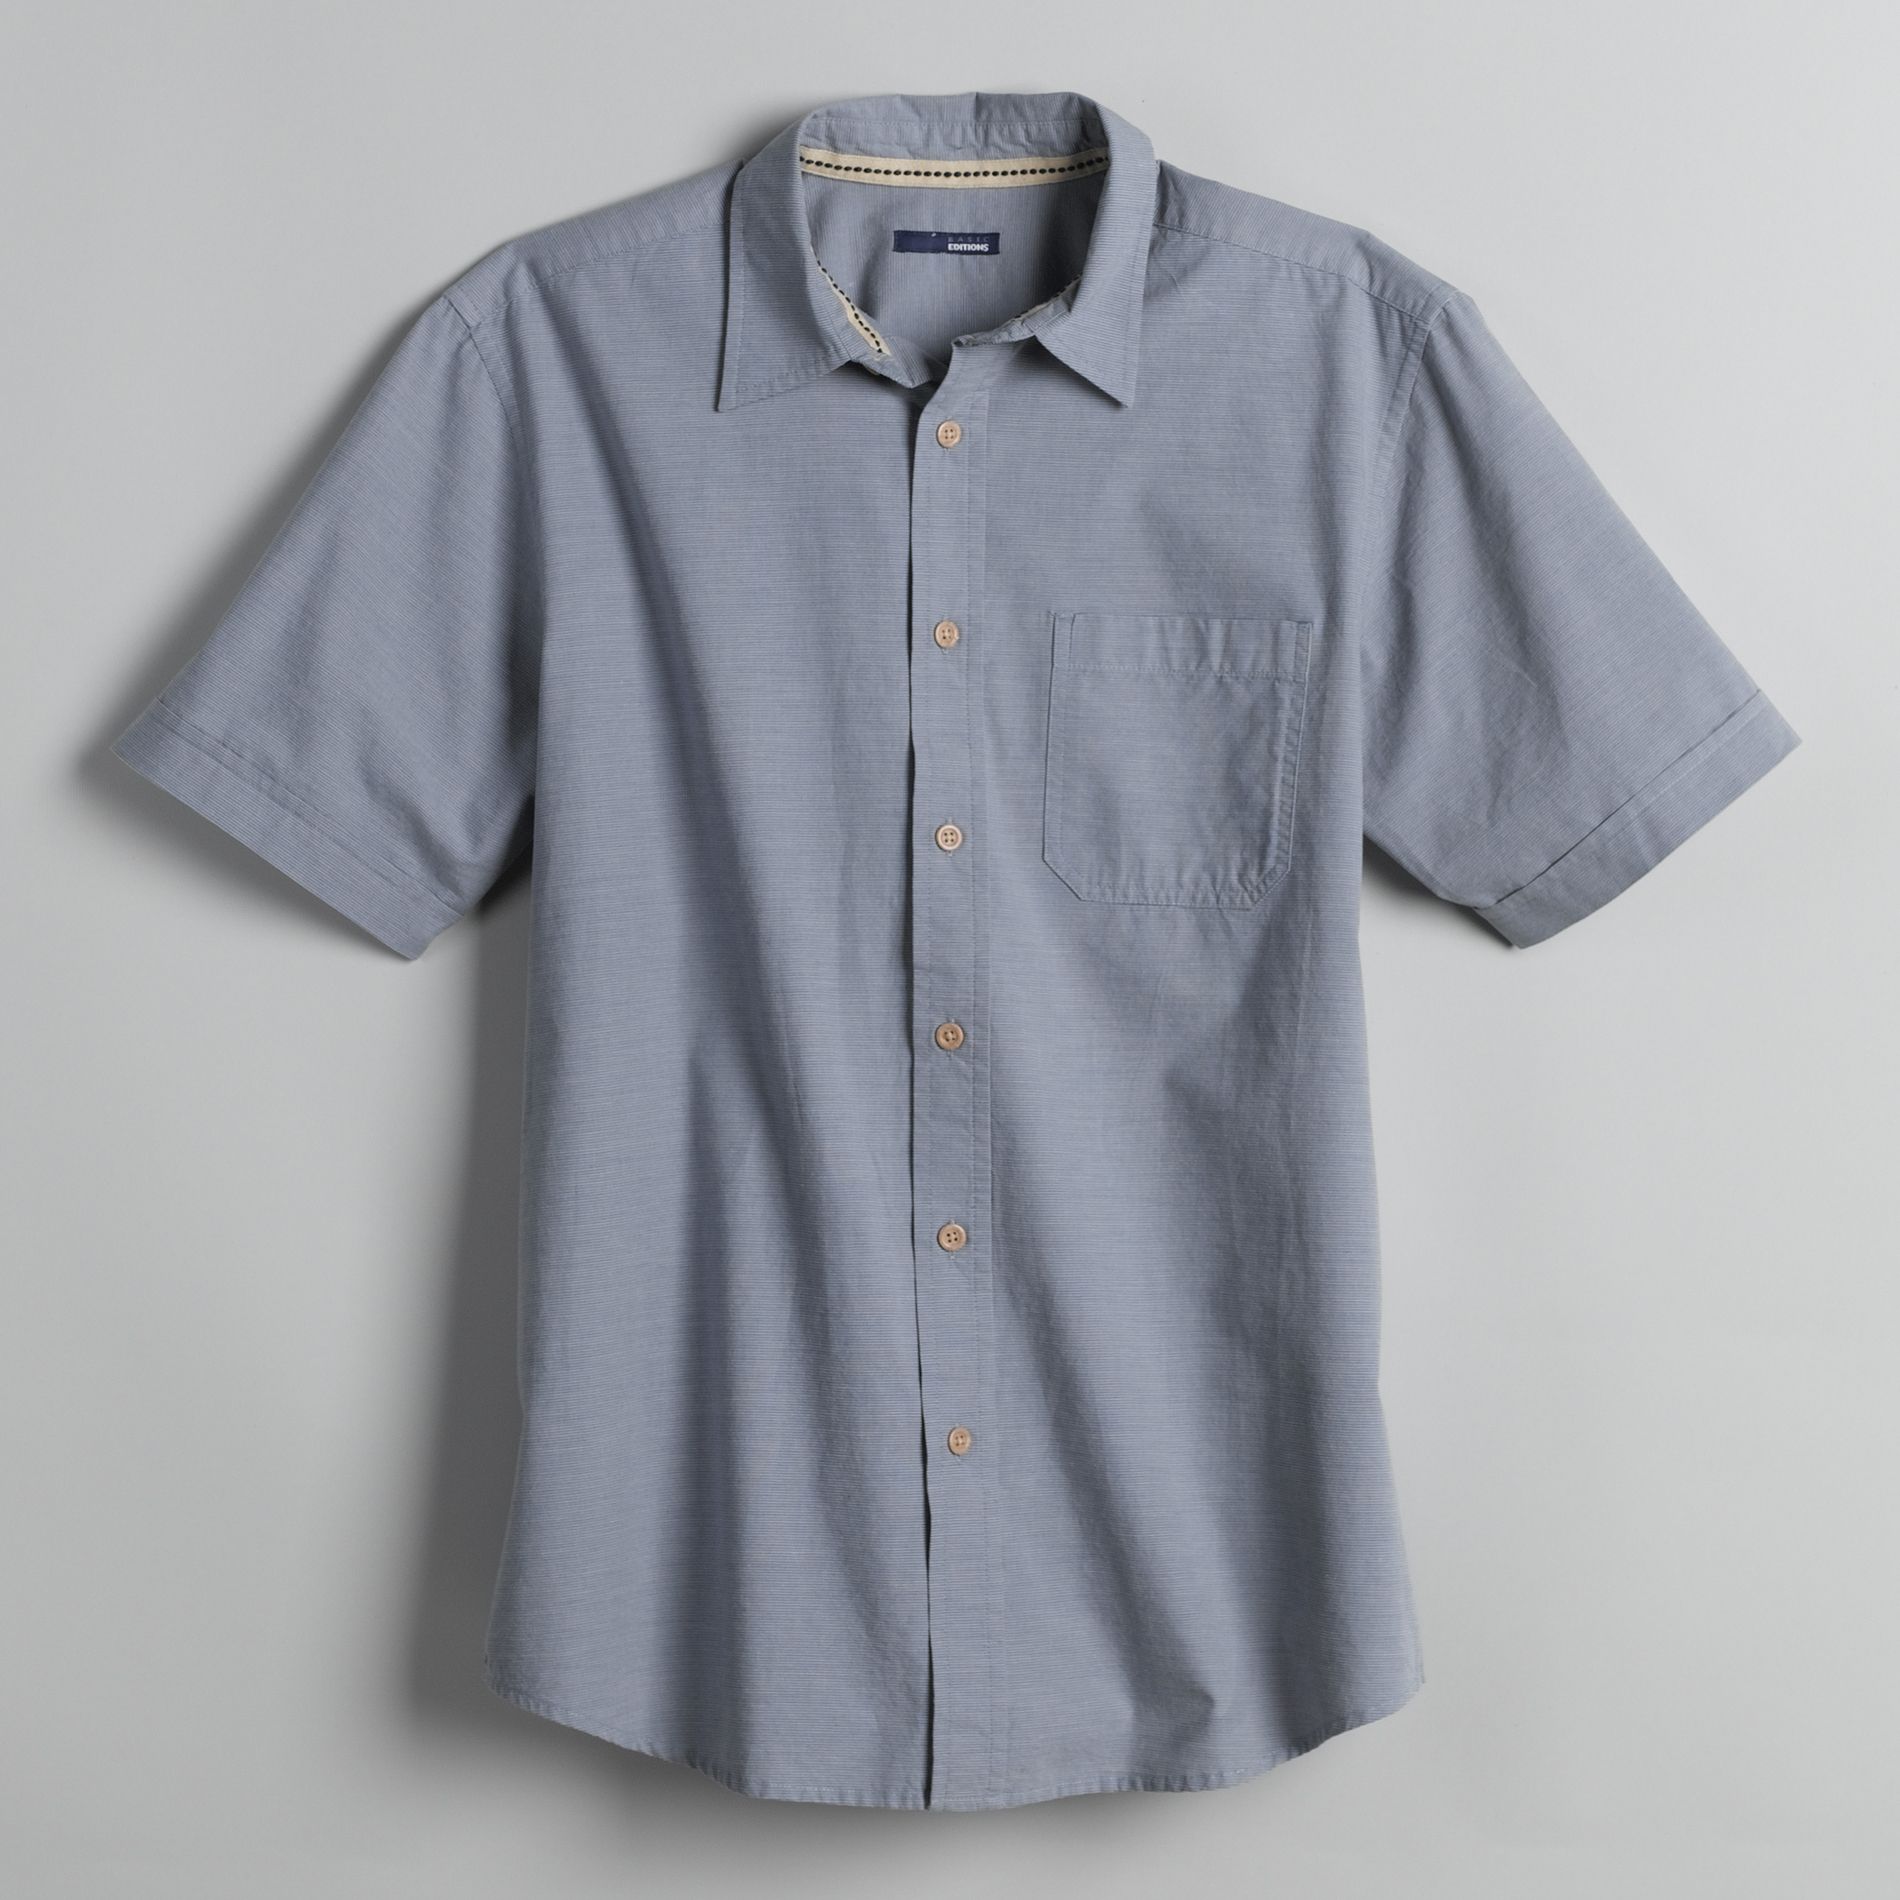 Basic Editions Men's Short Sleeve Striped Shirt